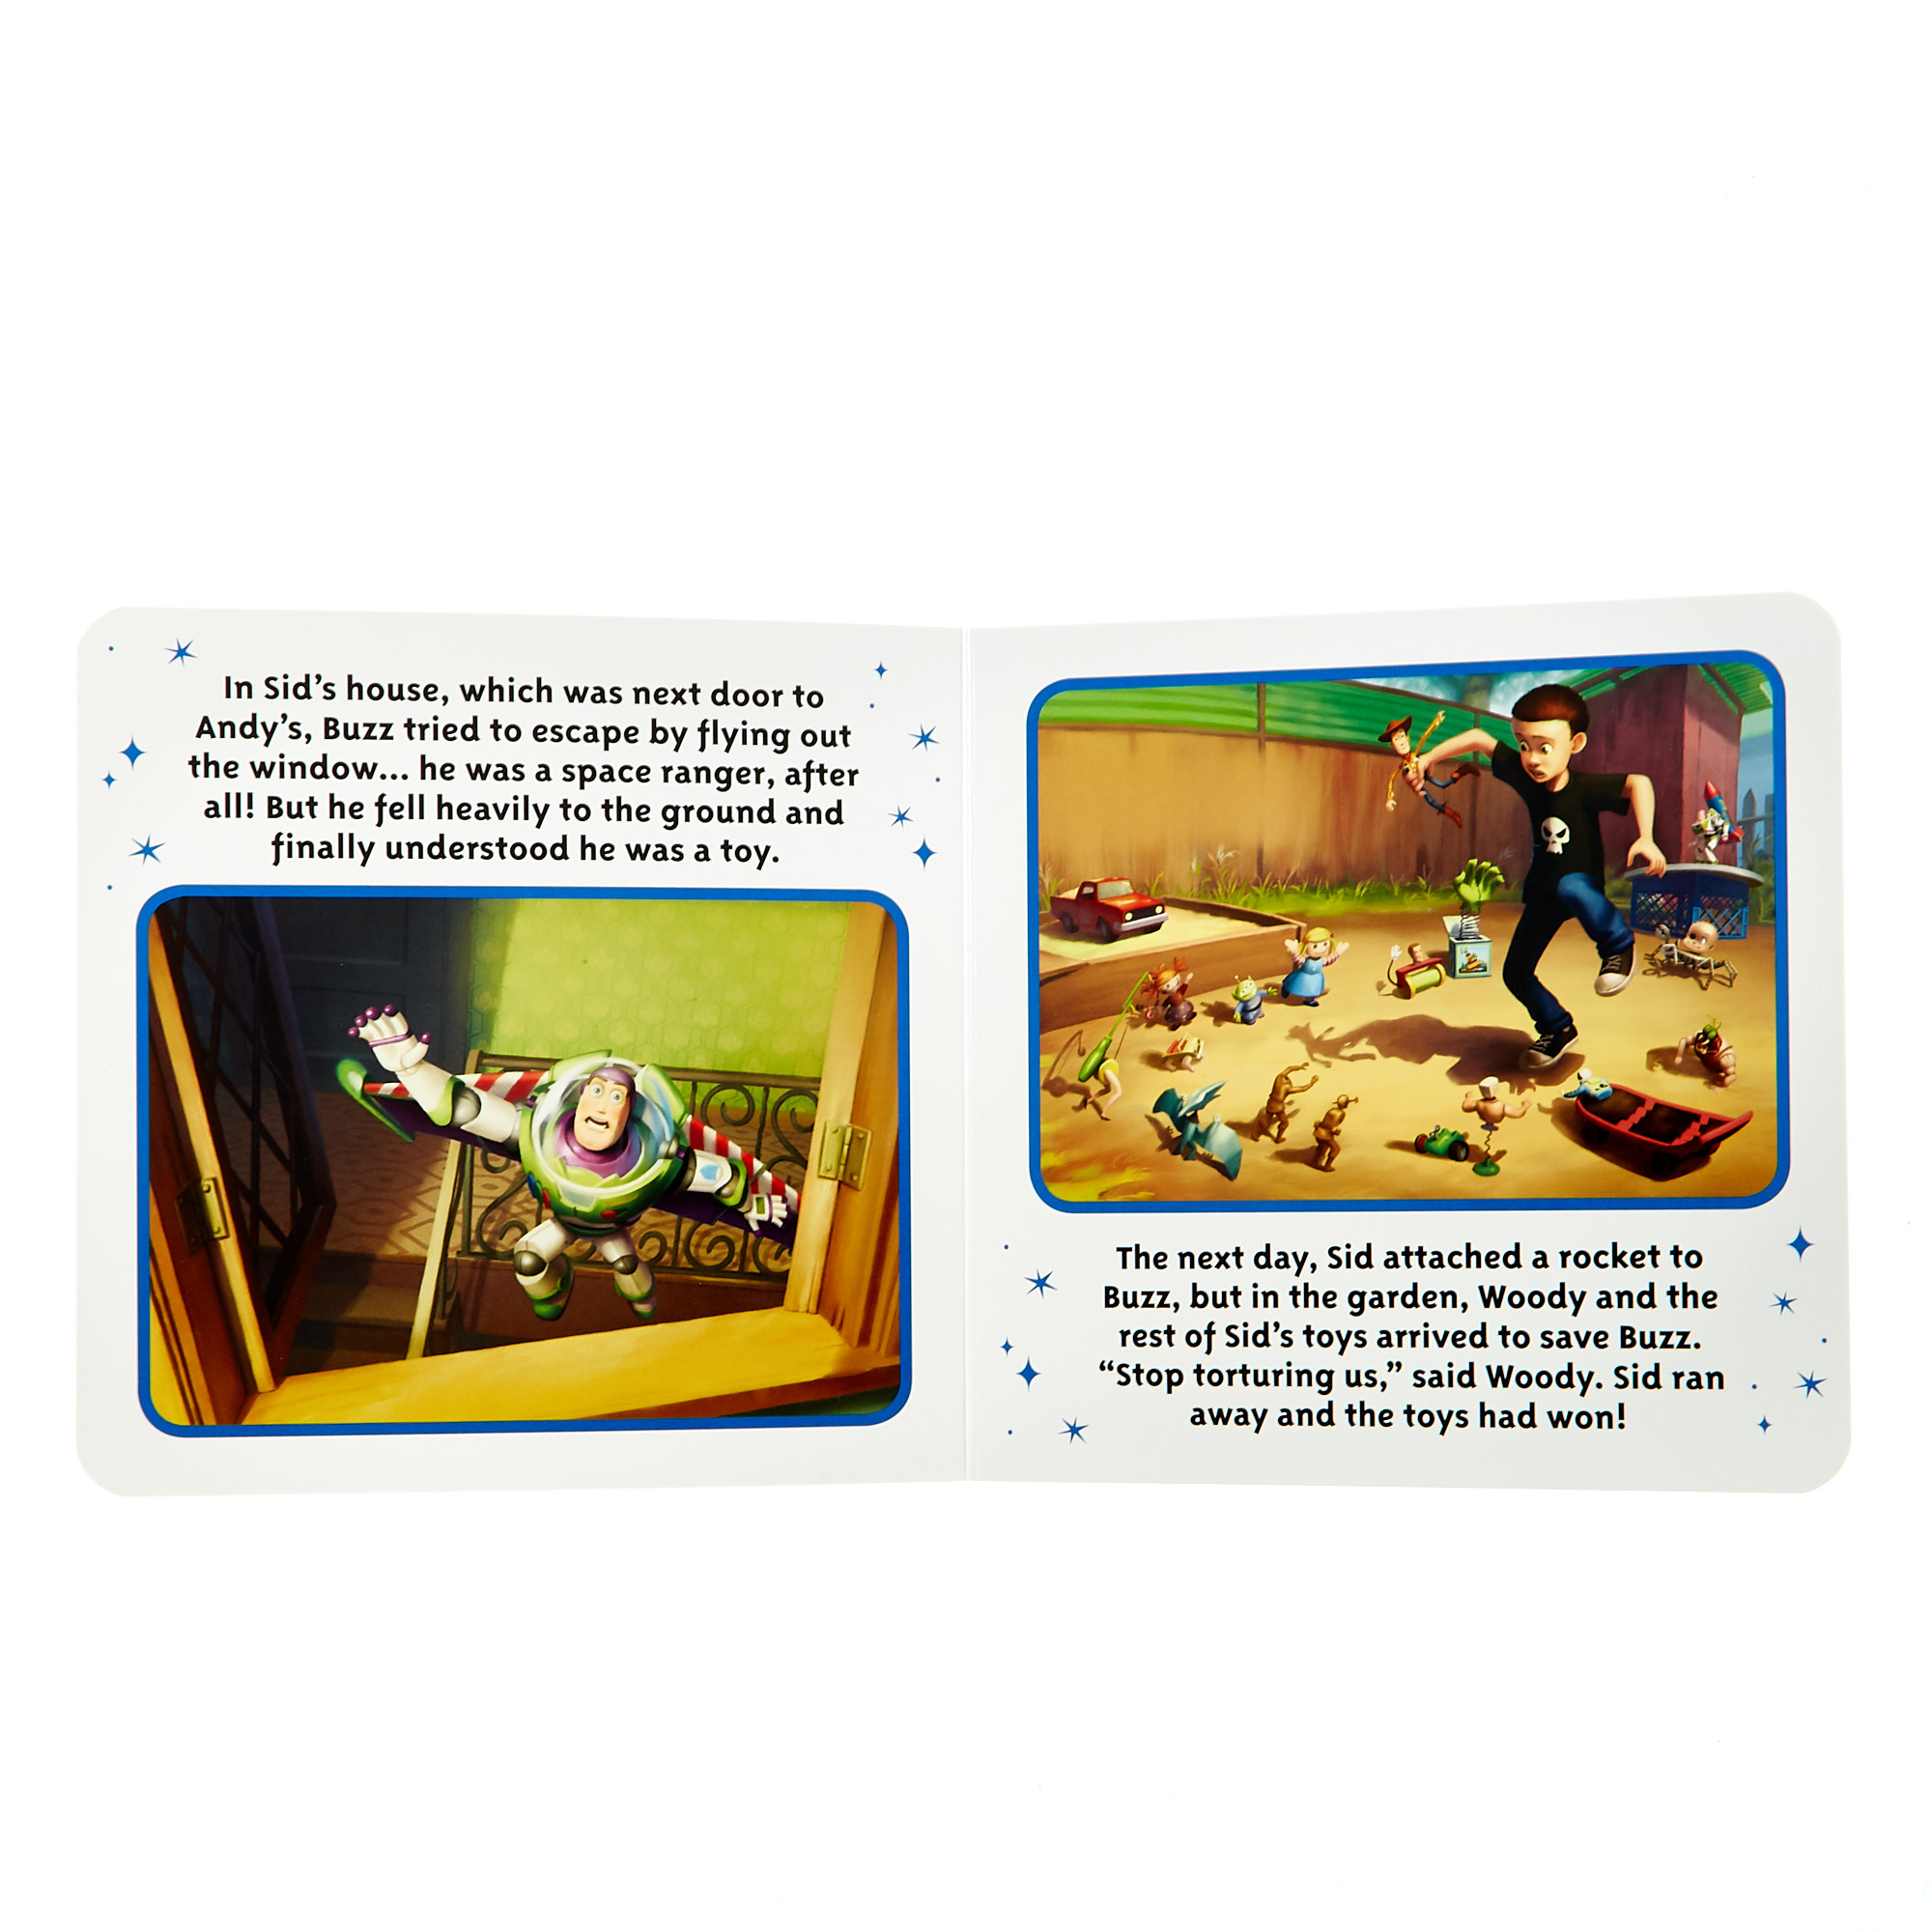 Disney Pixar Bedtime Stories - Toy Story Book